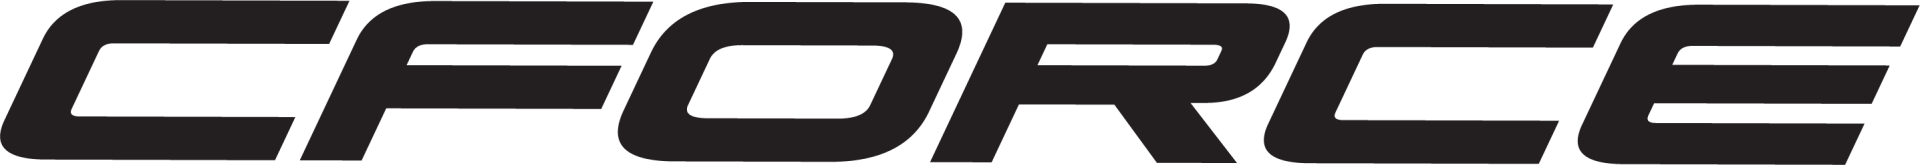 CFORCE 600 Logo